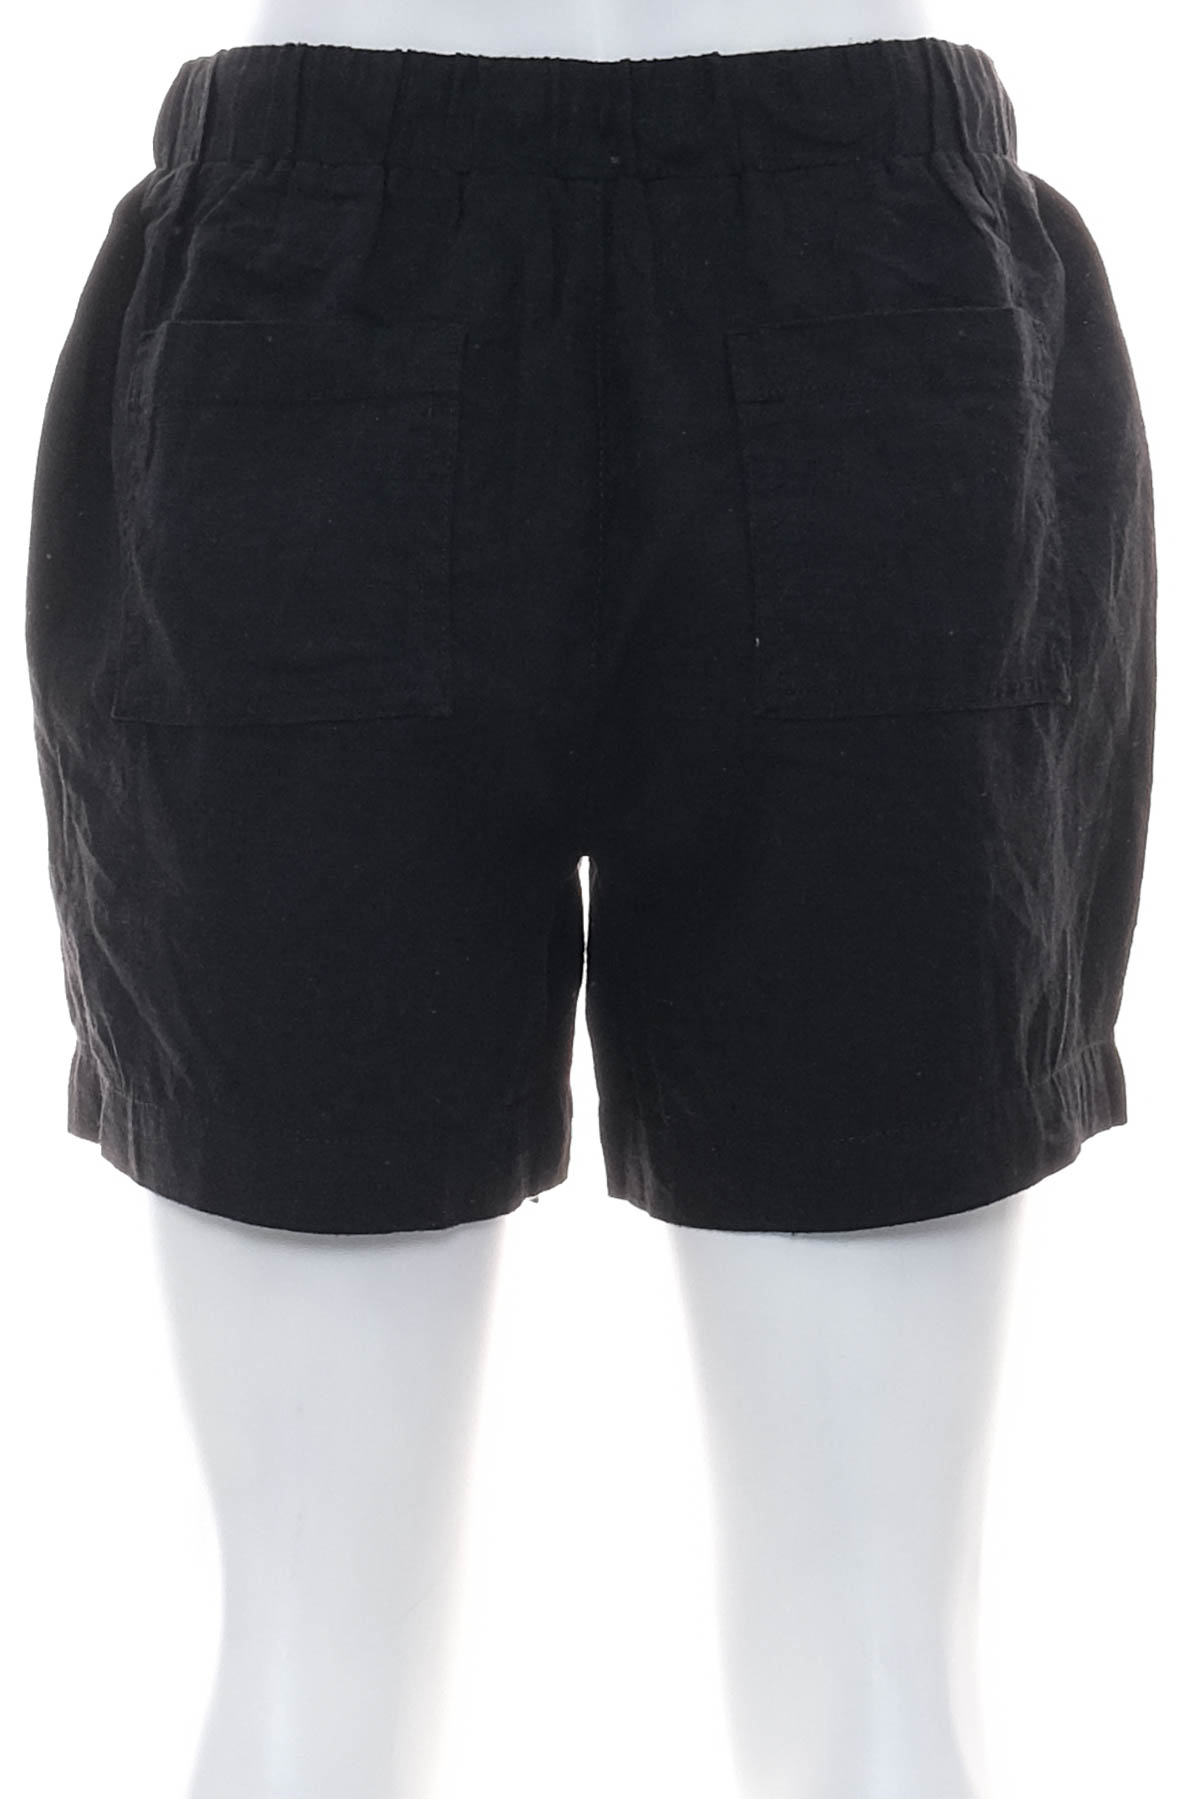 Female shorts - BRIGGS NEW YORK - 1